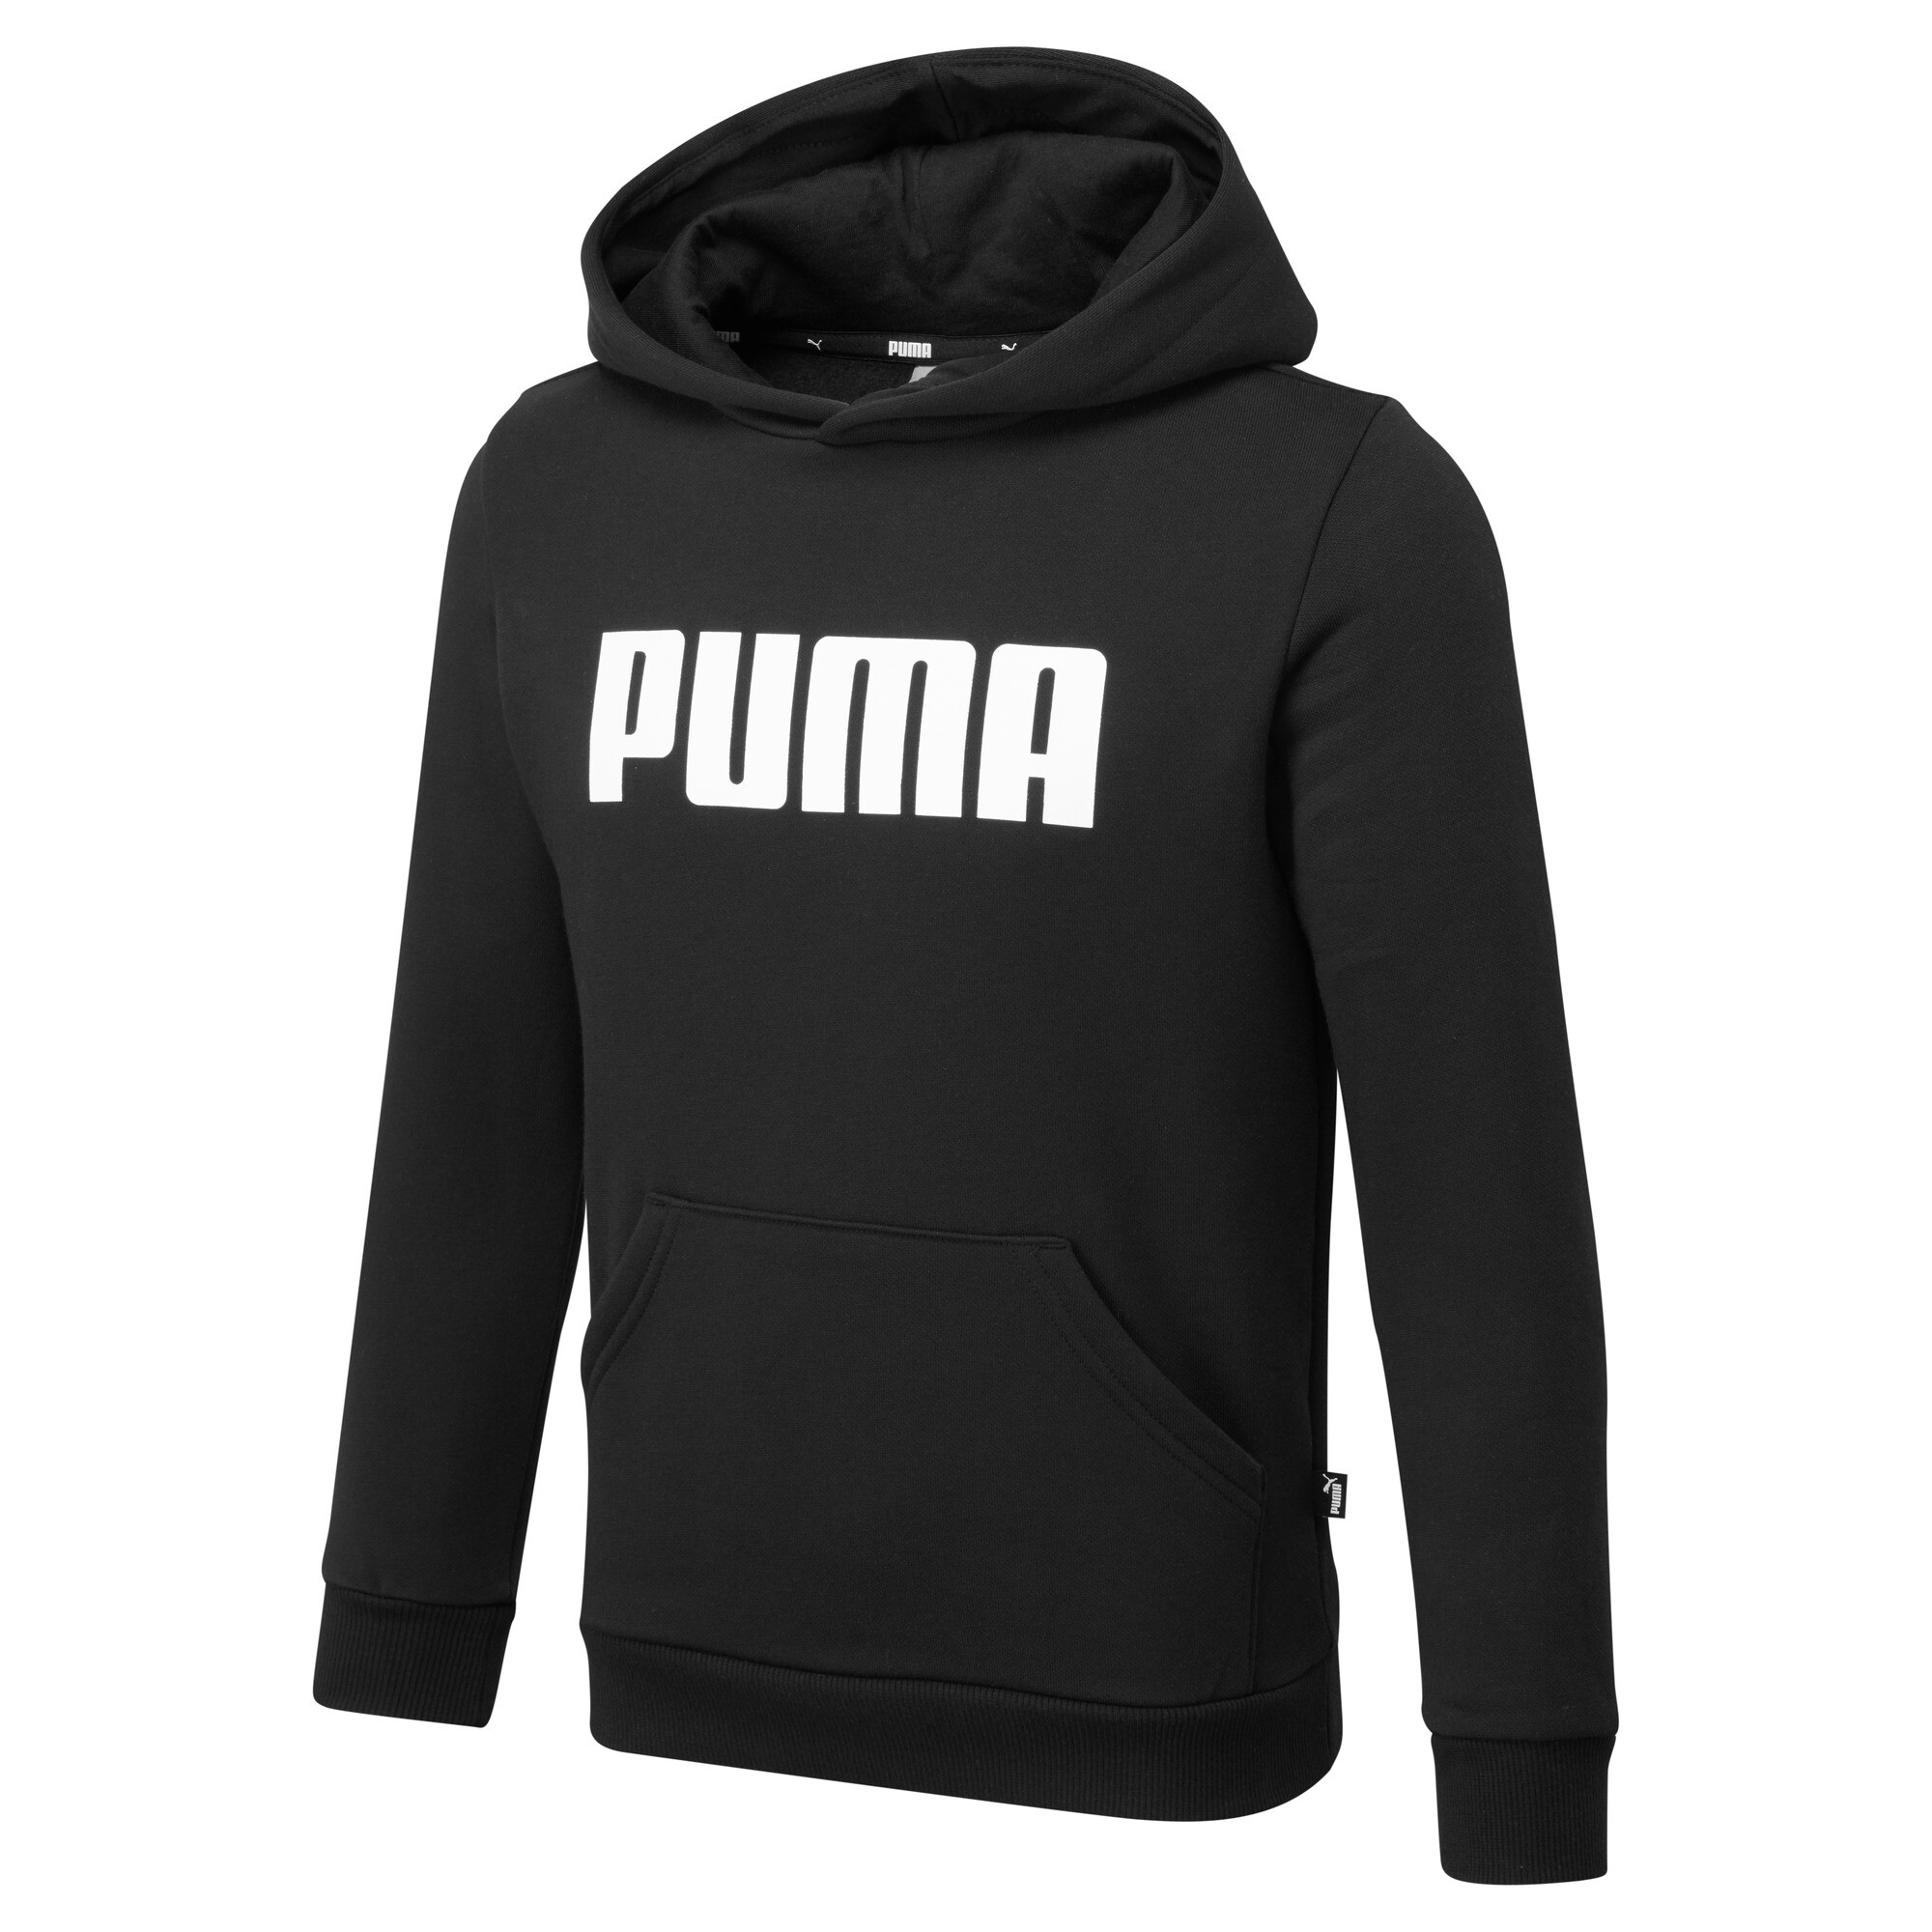 Men's Puma Essentials Youth Hoodie, Black, Size 15-16Y, Clothing